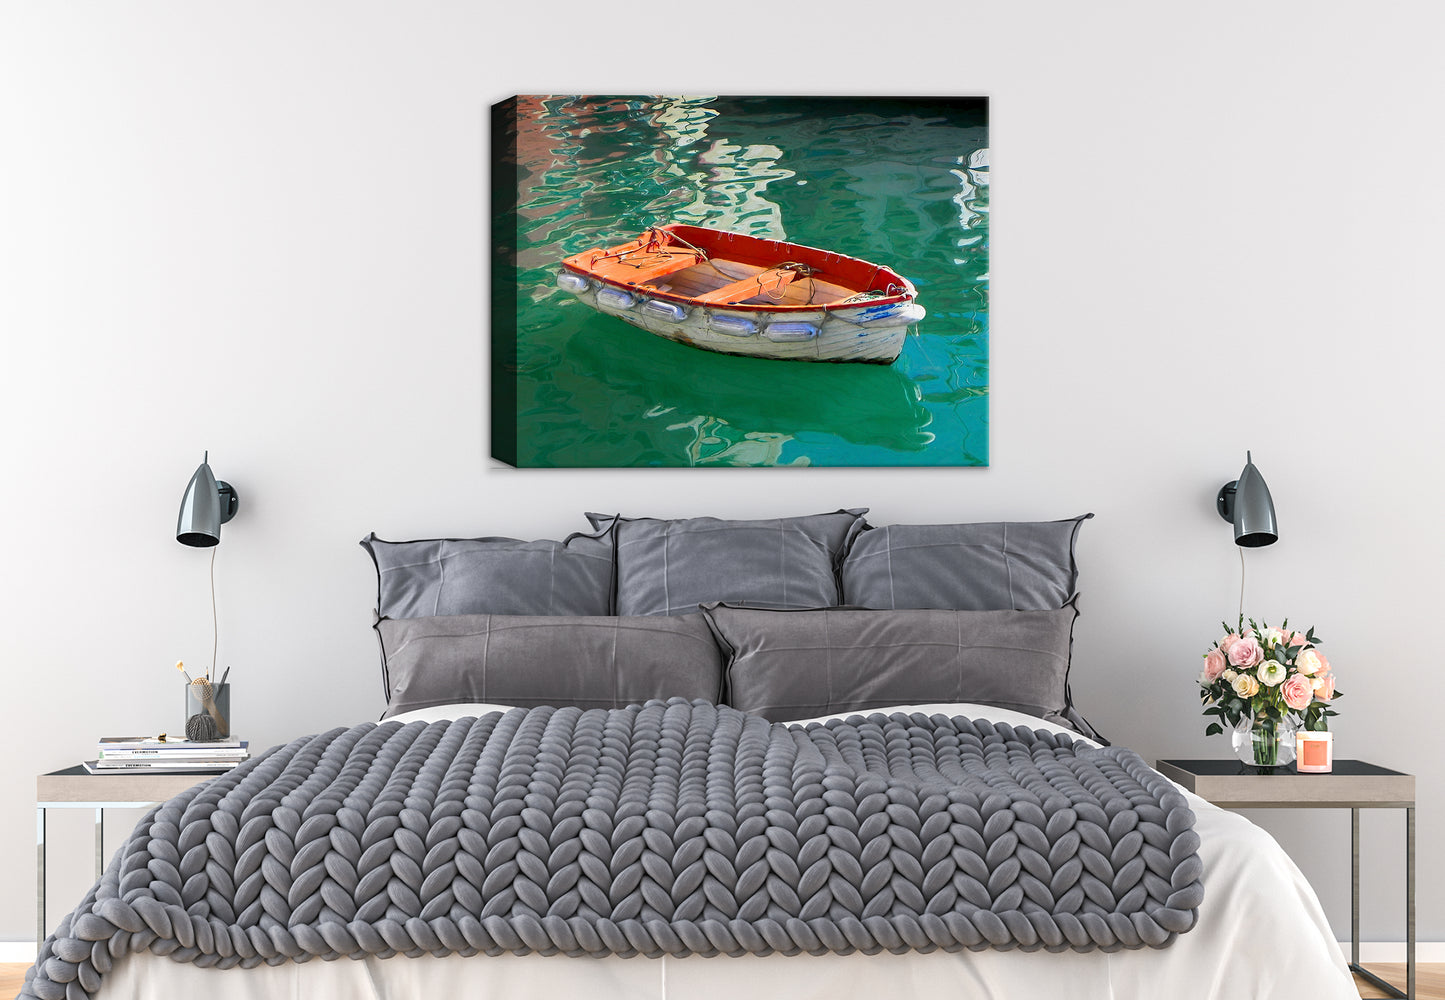 Portofino Boat - Painting on Canvas